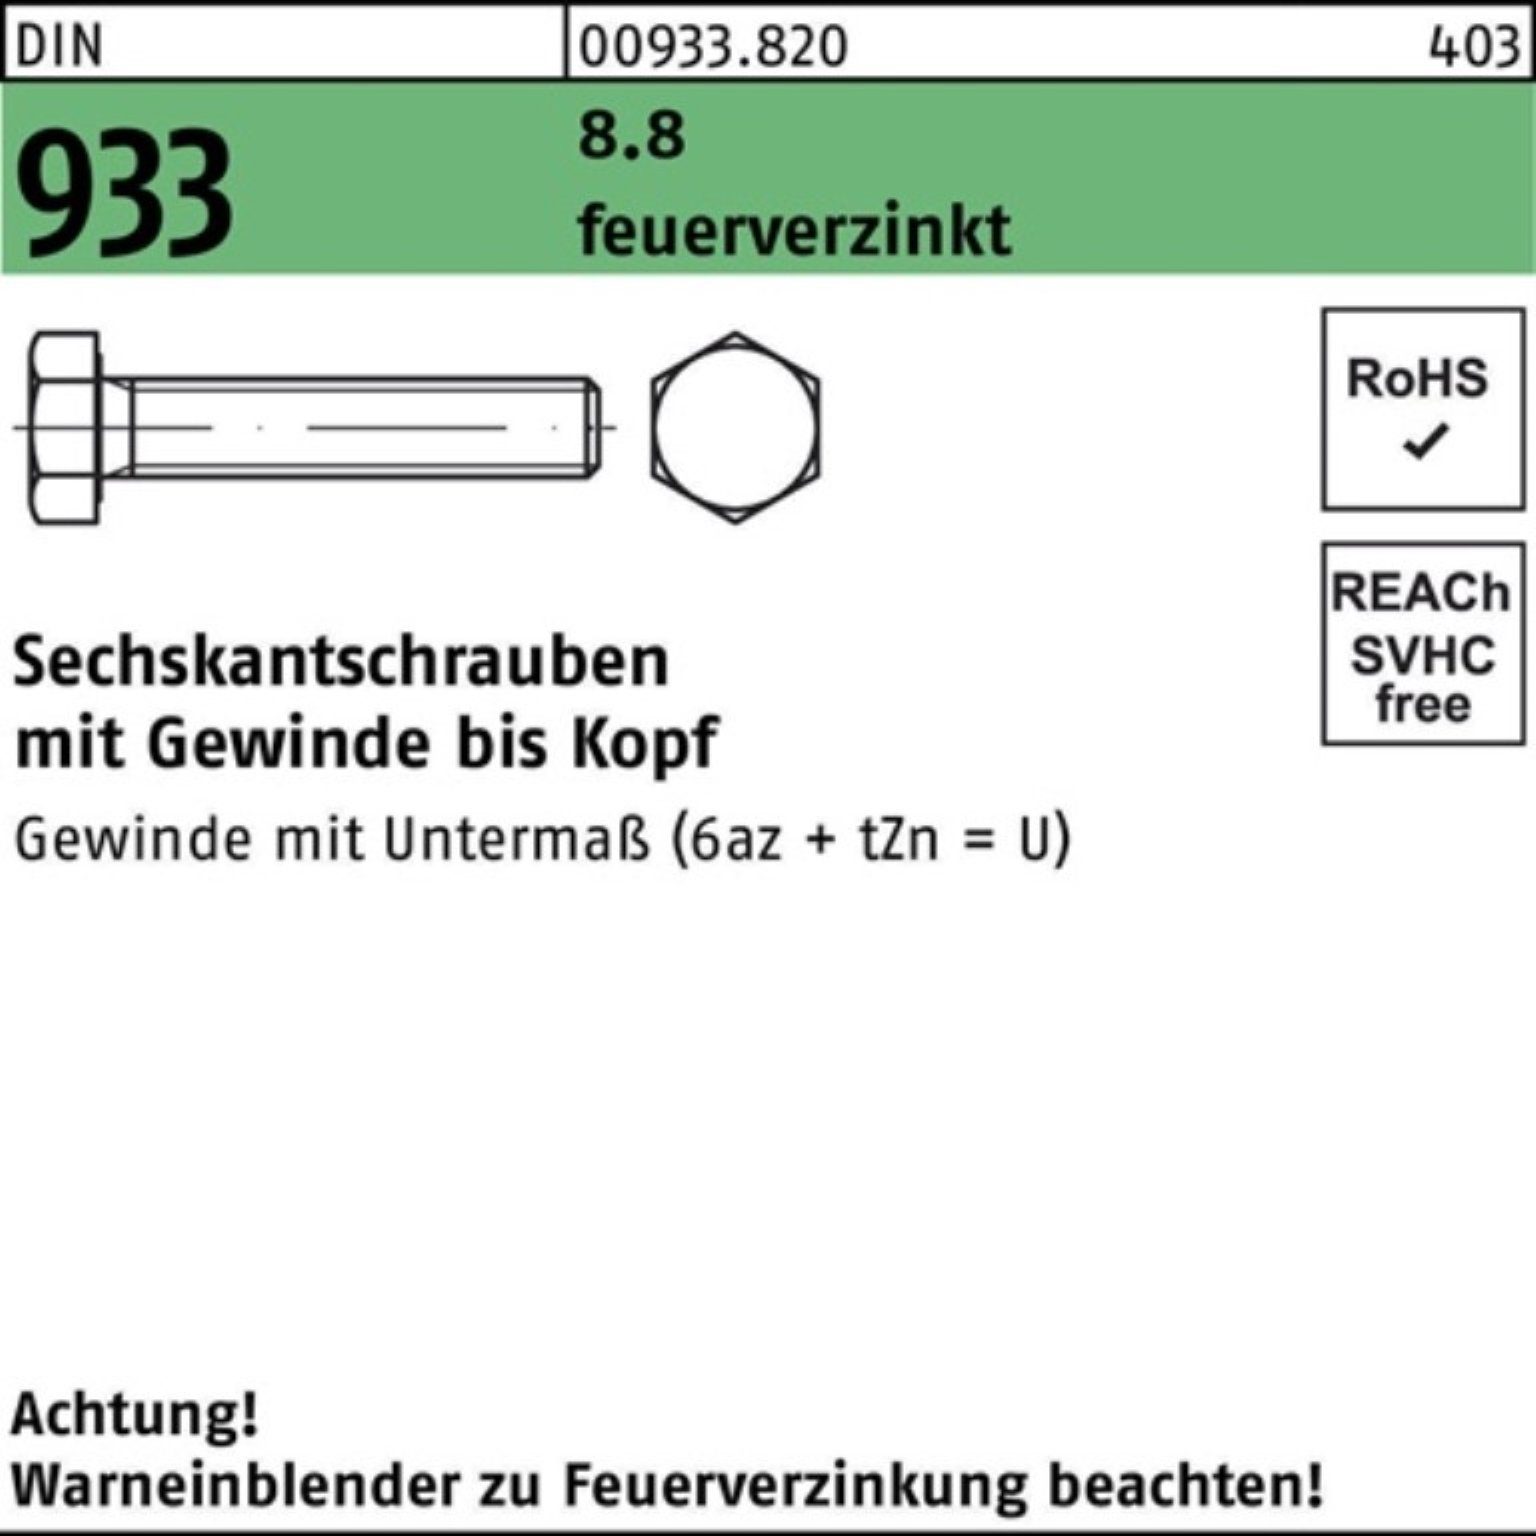 VG Sechskantschraube 1 100er feuerverz. Sechskantschraube 933 Pack 8.8 M30x Stü Reyher 200 DIN